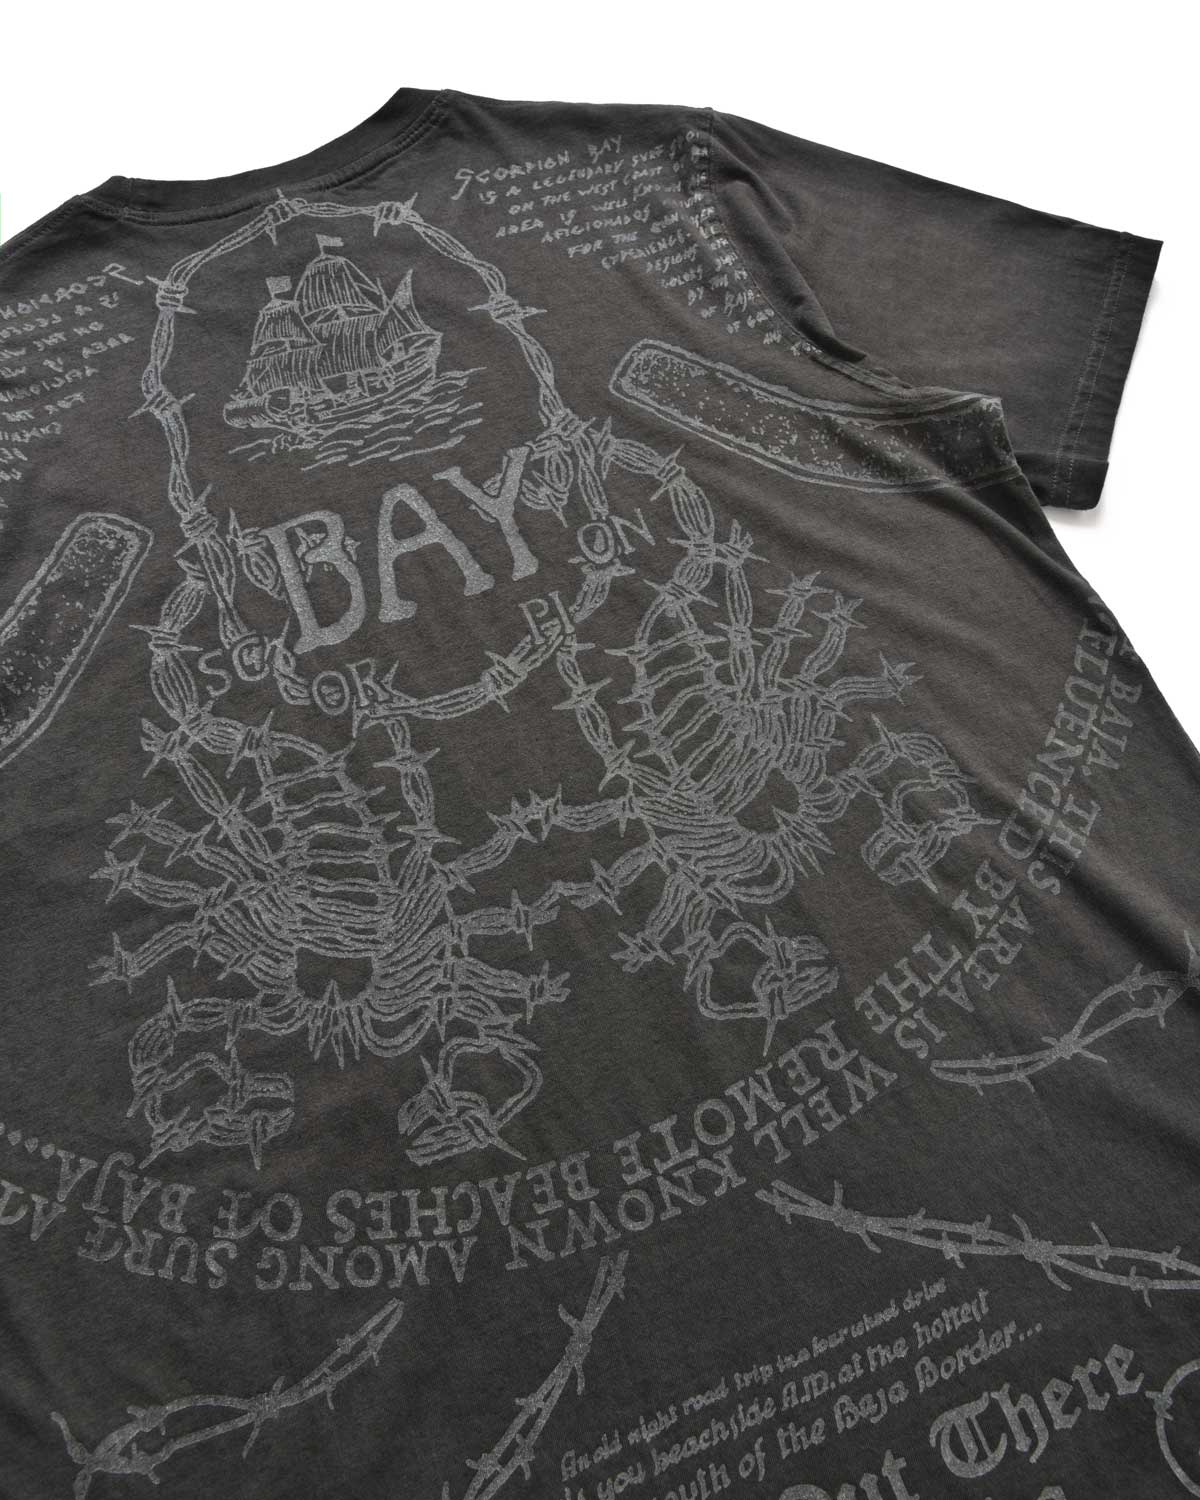 Man | 100% Cotton T-Shirt With "Scorpion Ouija" Print